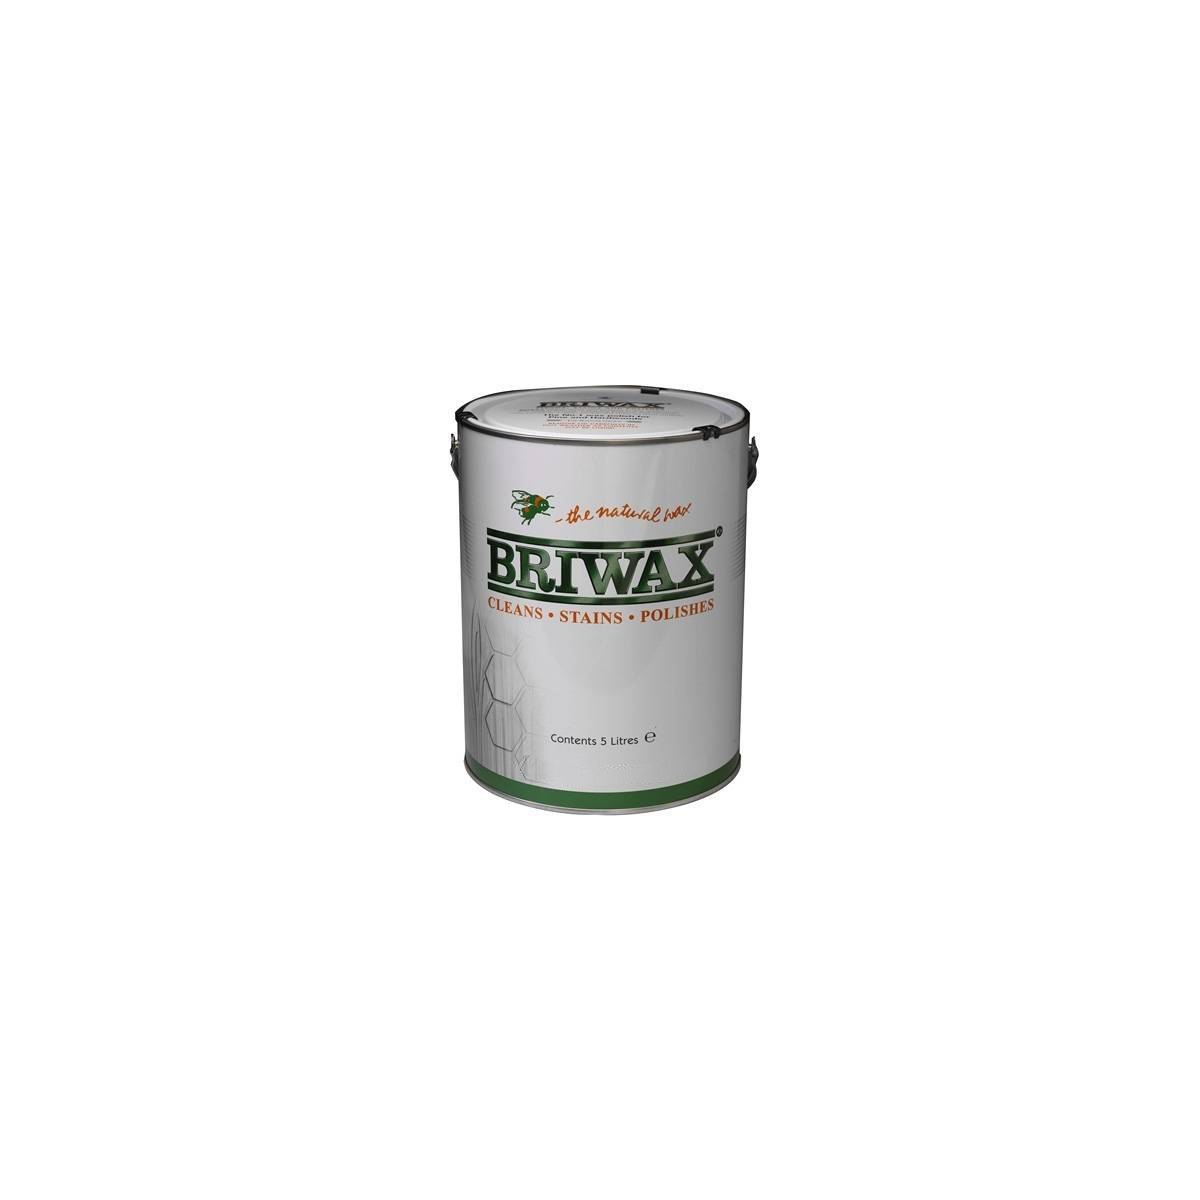 Briwax Original Wax Polish Medium Brown 5 Litre